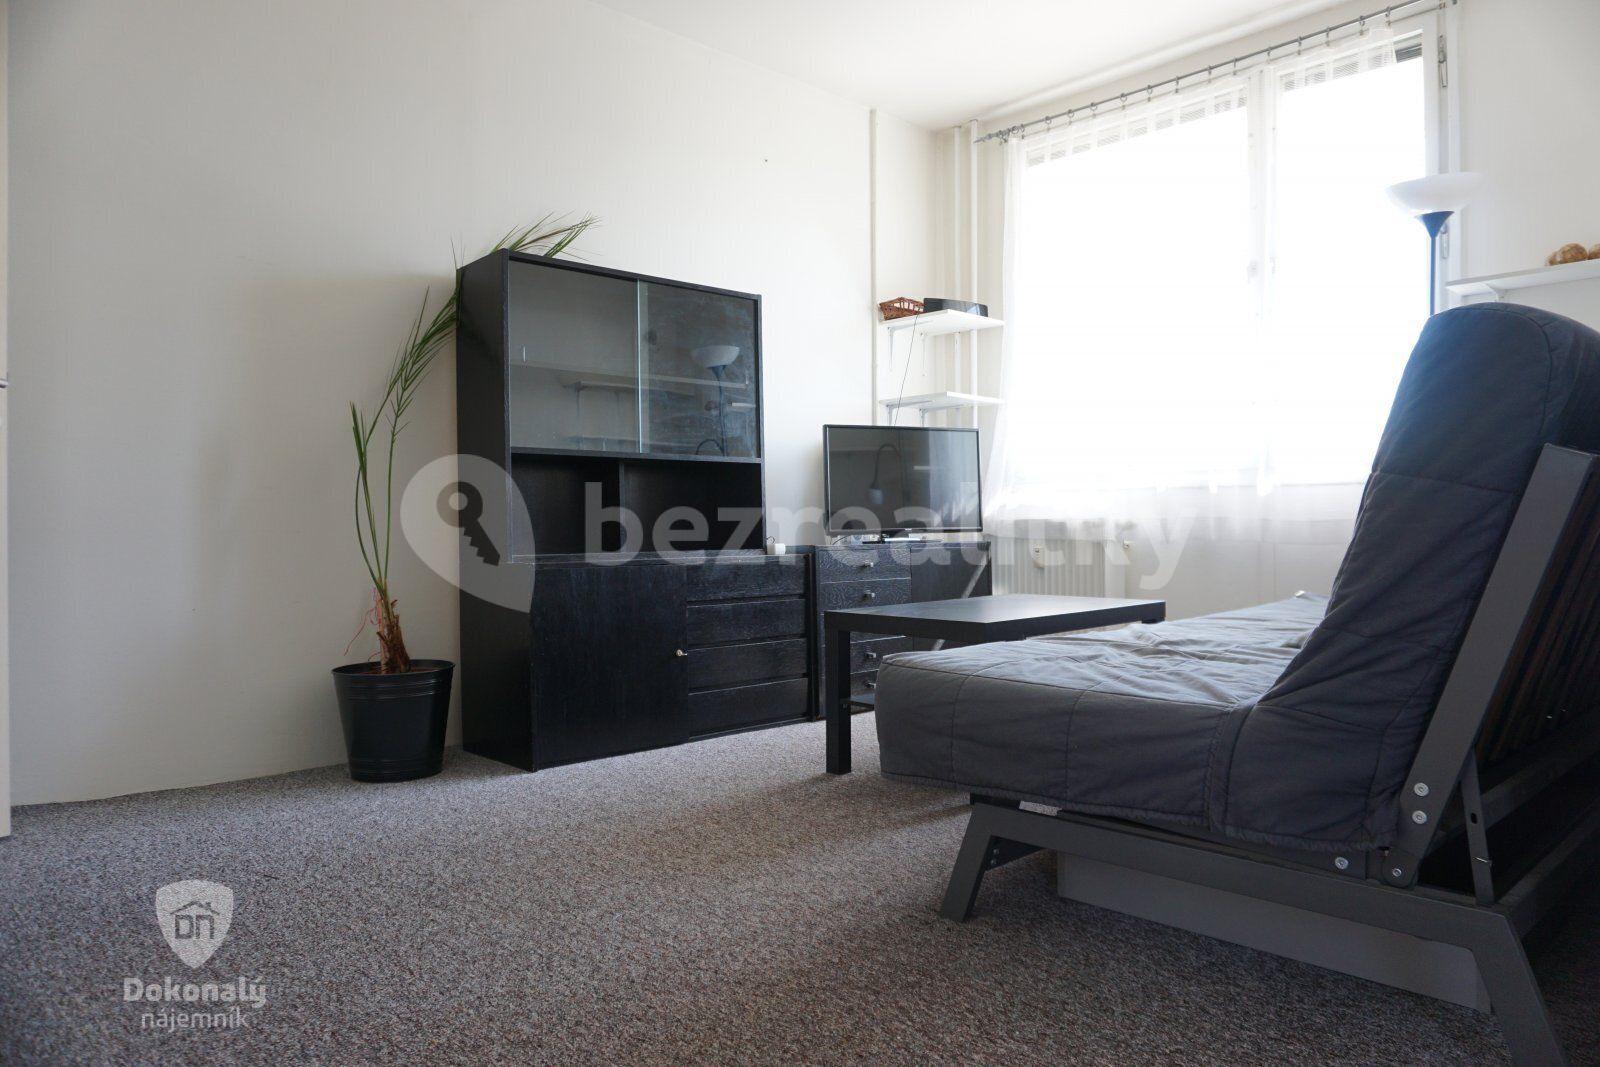 3 bedroom with open-plan kitchen flat to rent, 68 m², Novoborská, Prague, Prague